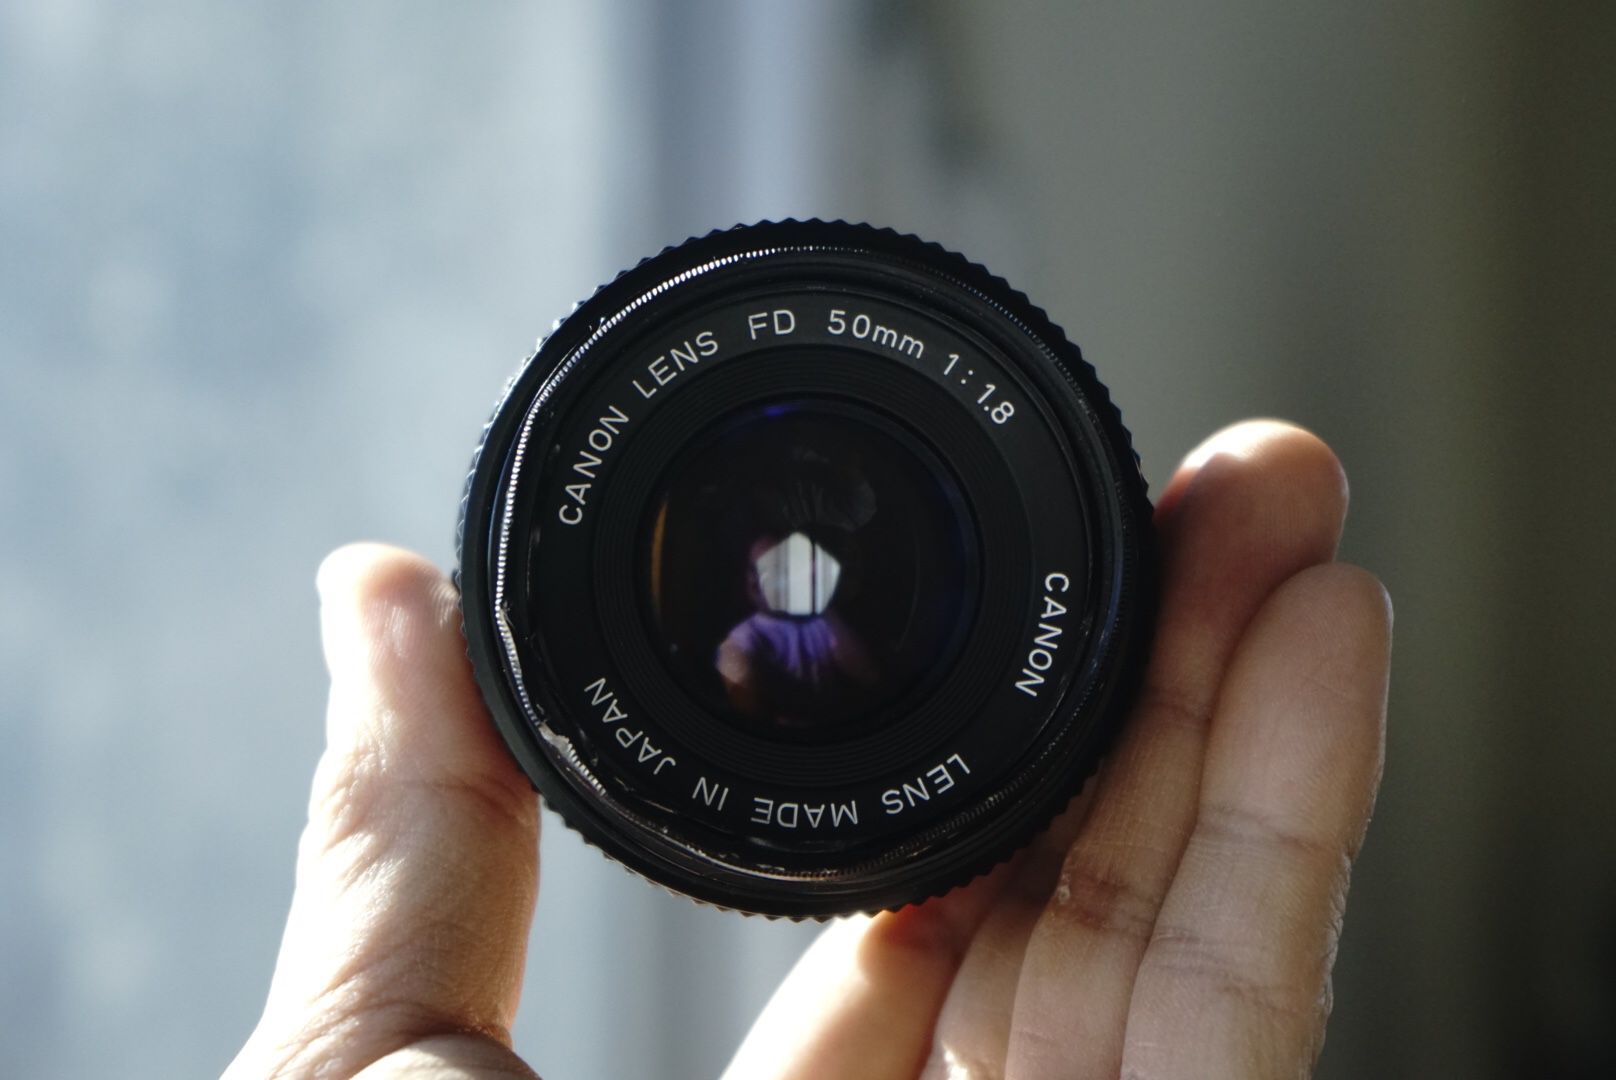 Canon 50mm f/1.8 FD film lens